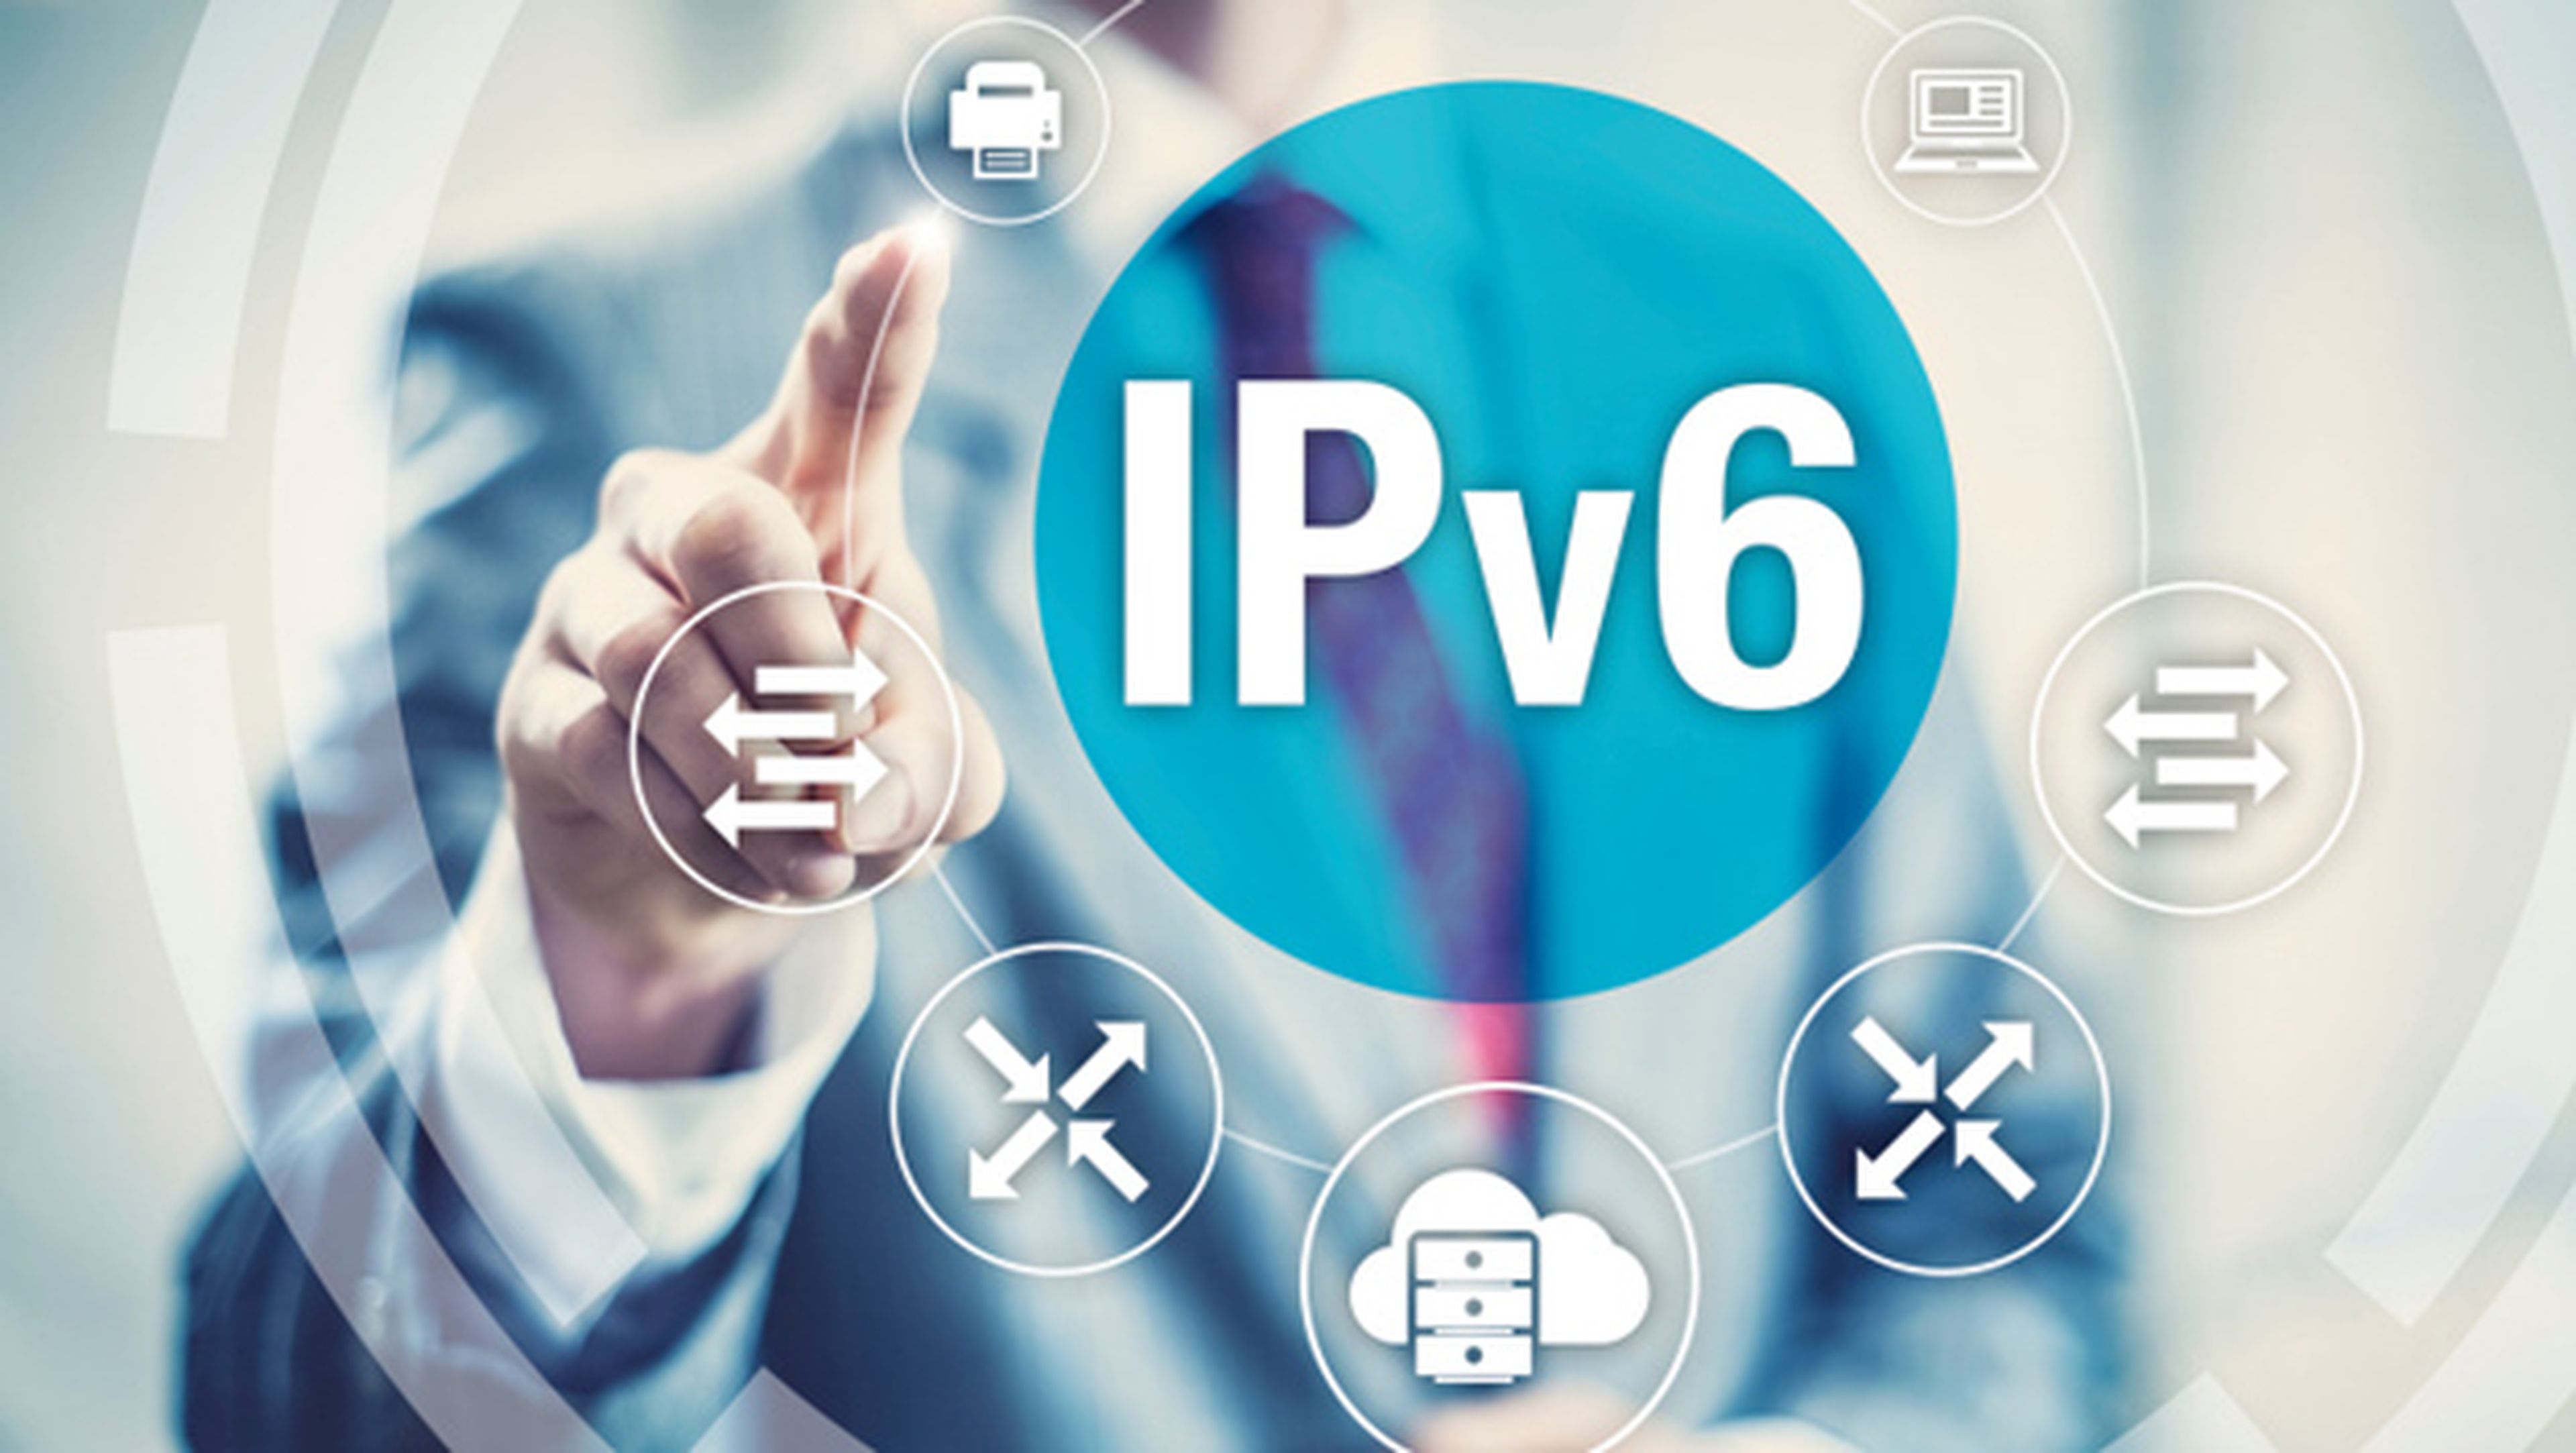 ipv6 definicion, ipv6 conexion, protocolo ipv6, explicacion ipv6